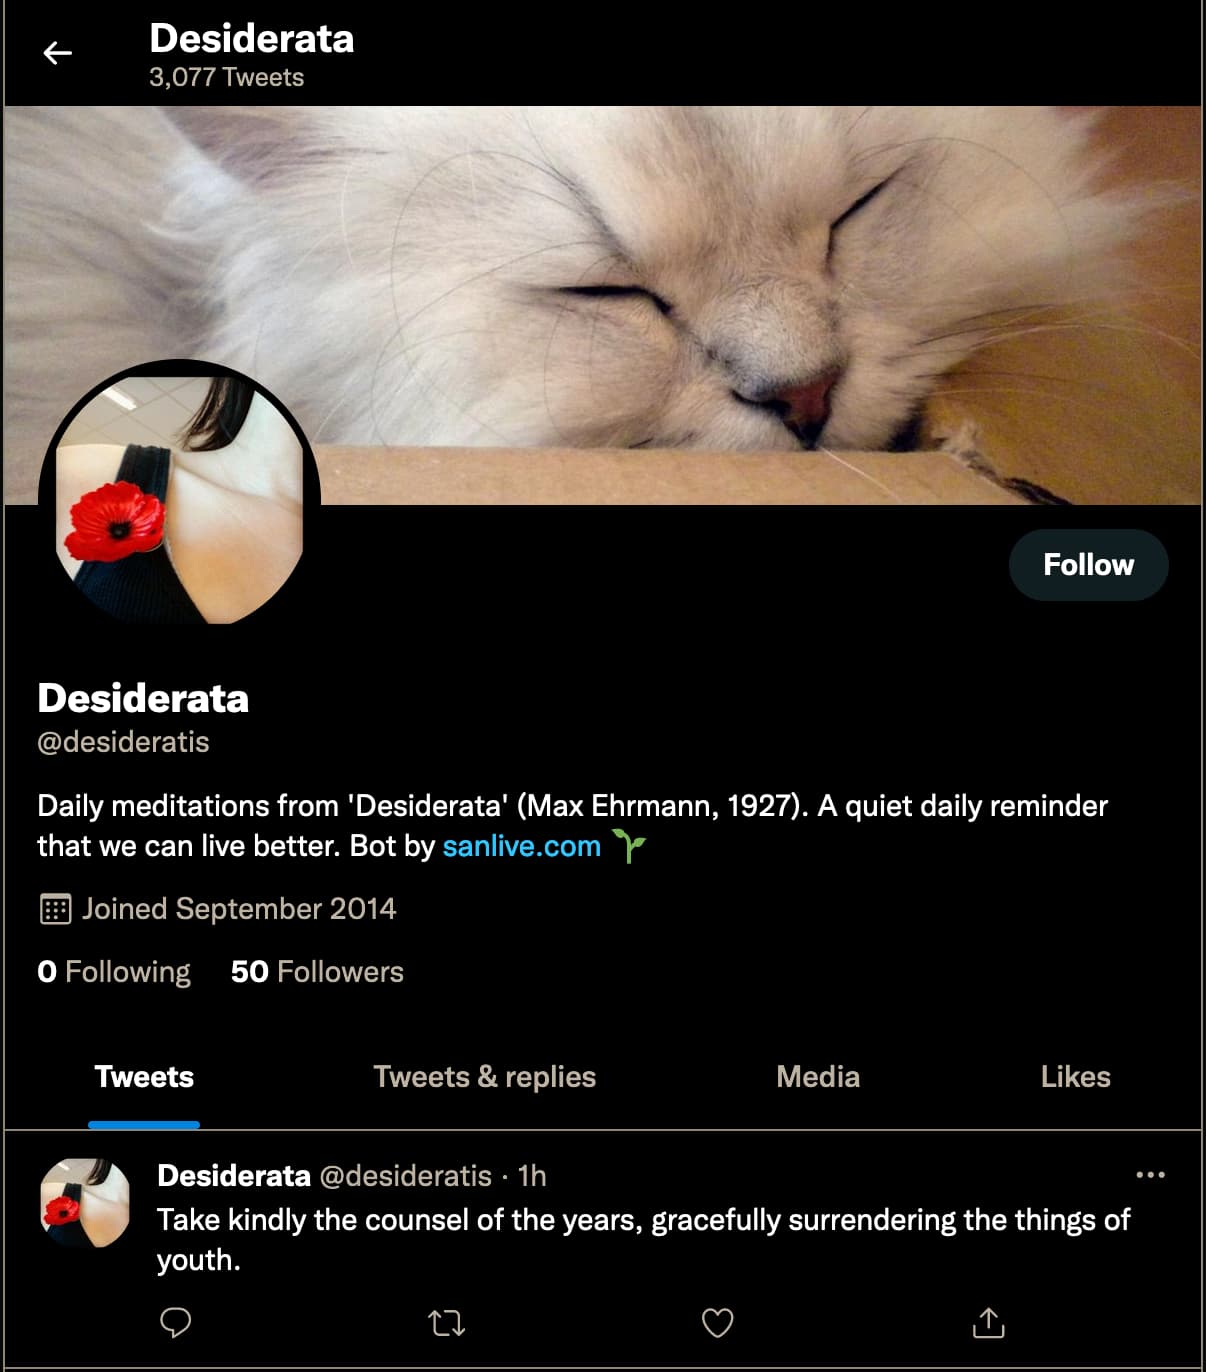 Twitter profile masthead of Desideratis bot